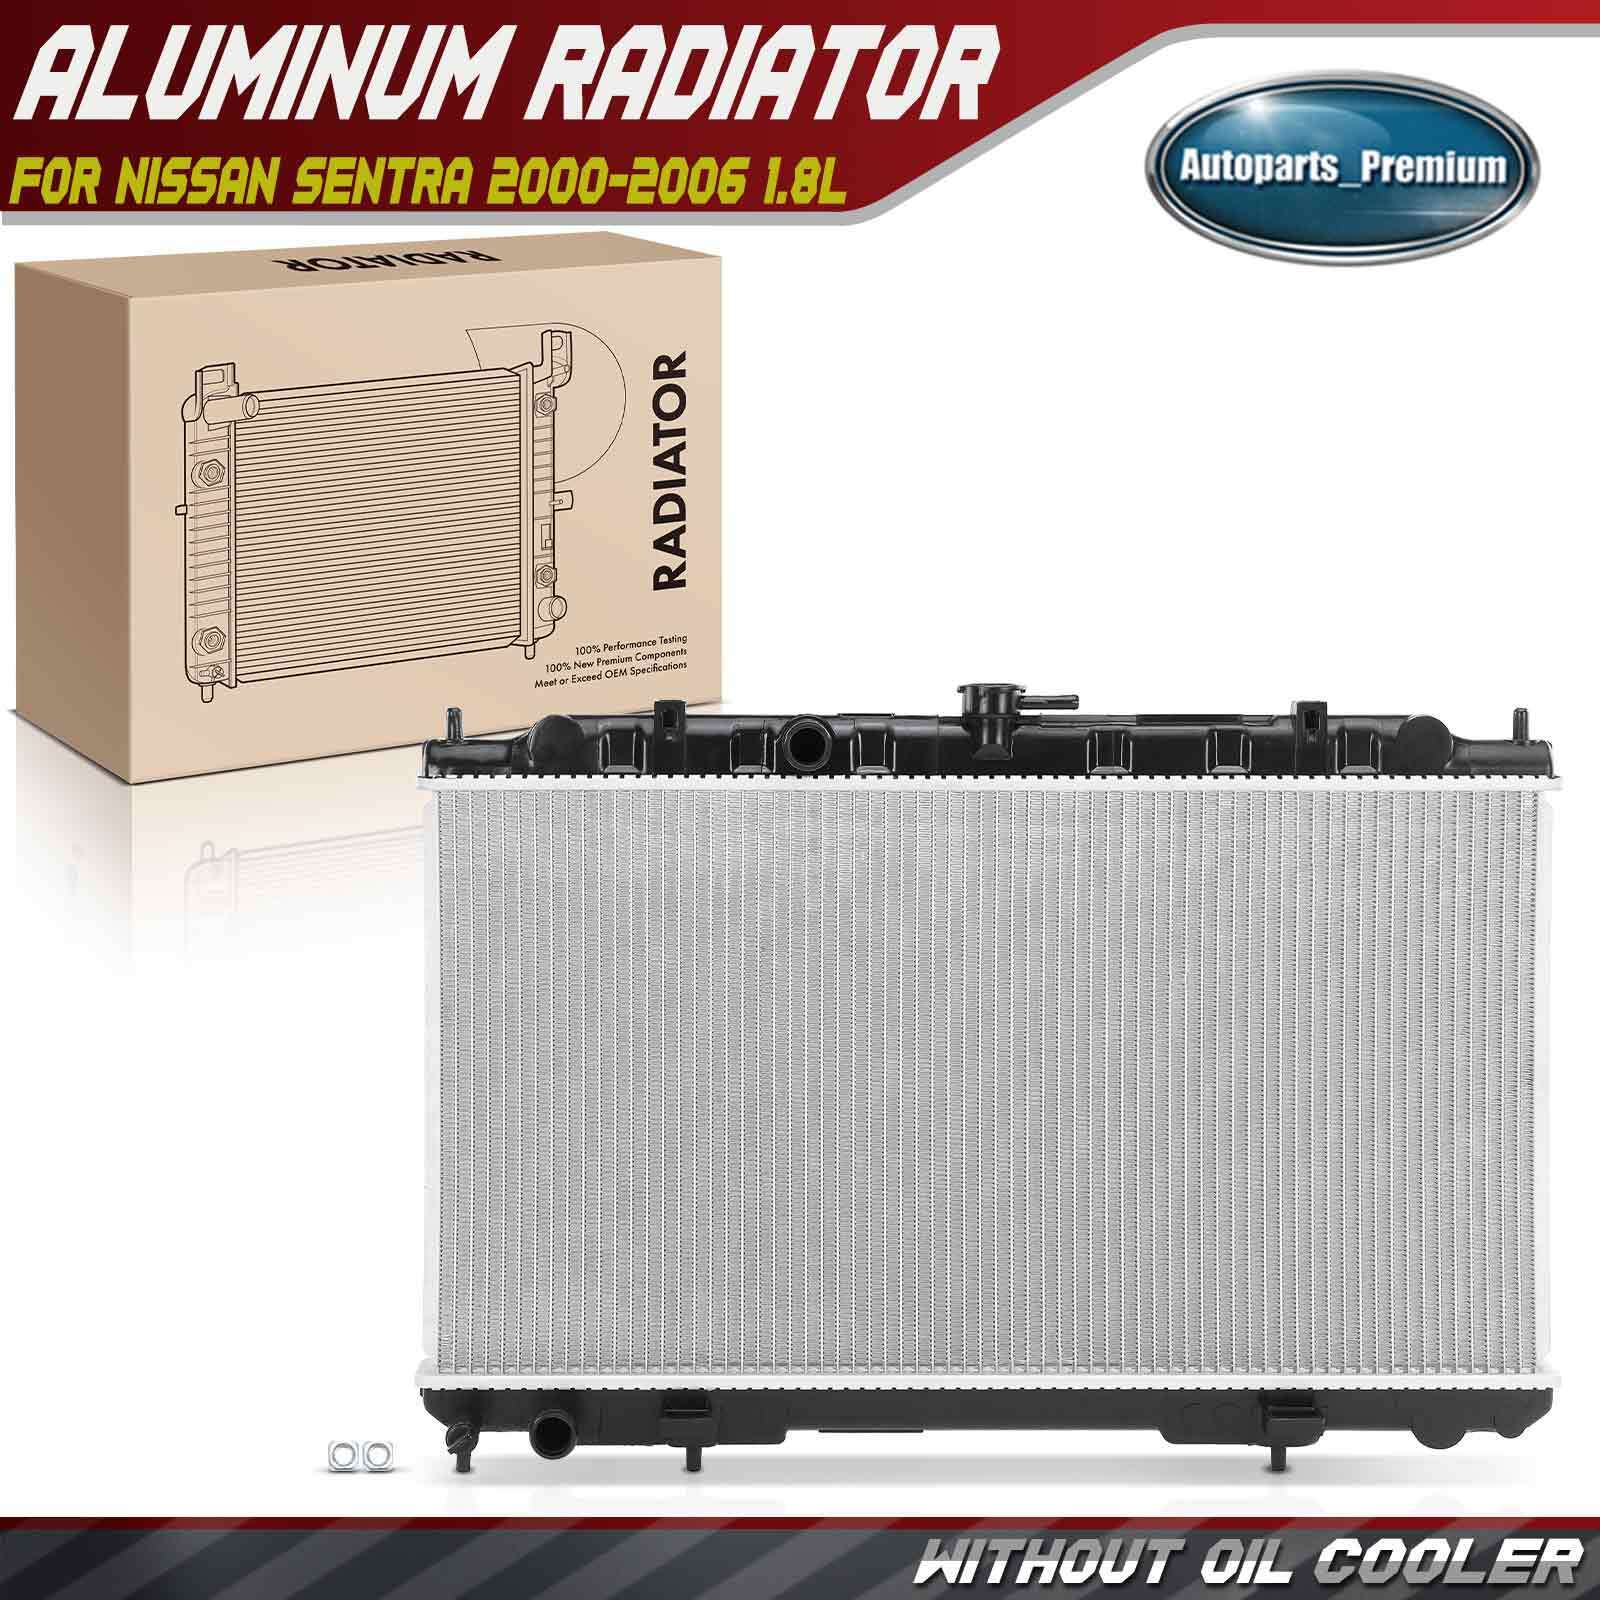 Aluminum Radiator w/o Oil Cooler for Nissan Sentra 2000-2006 1.8L Manual trans